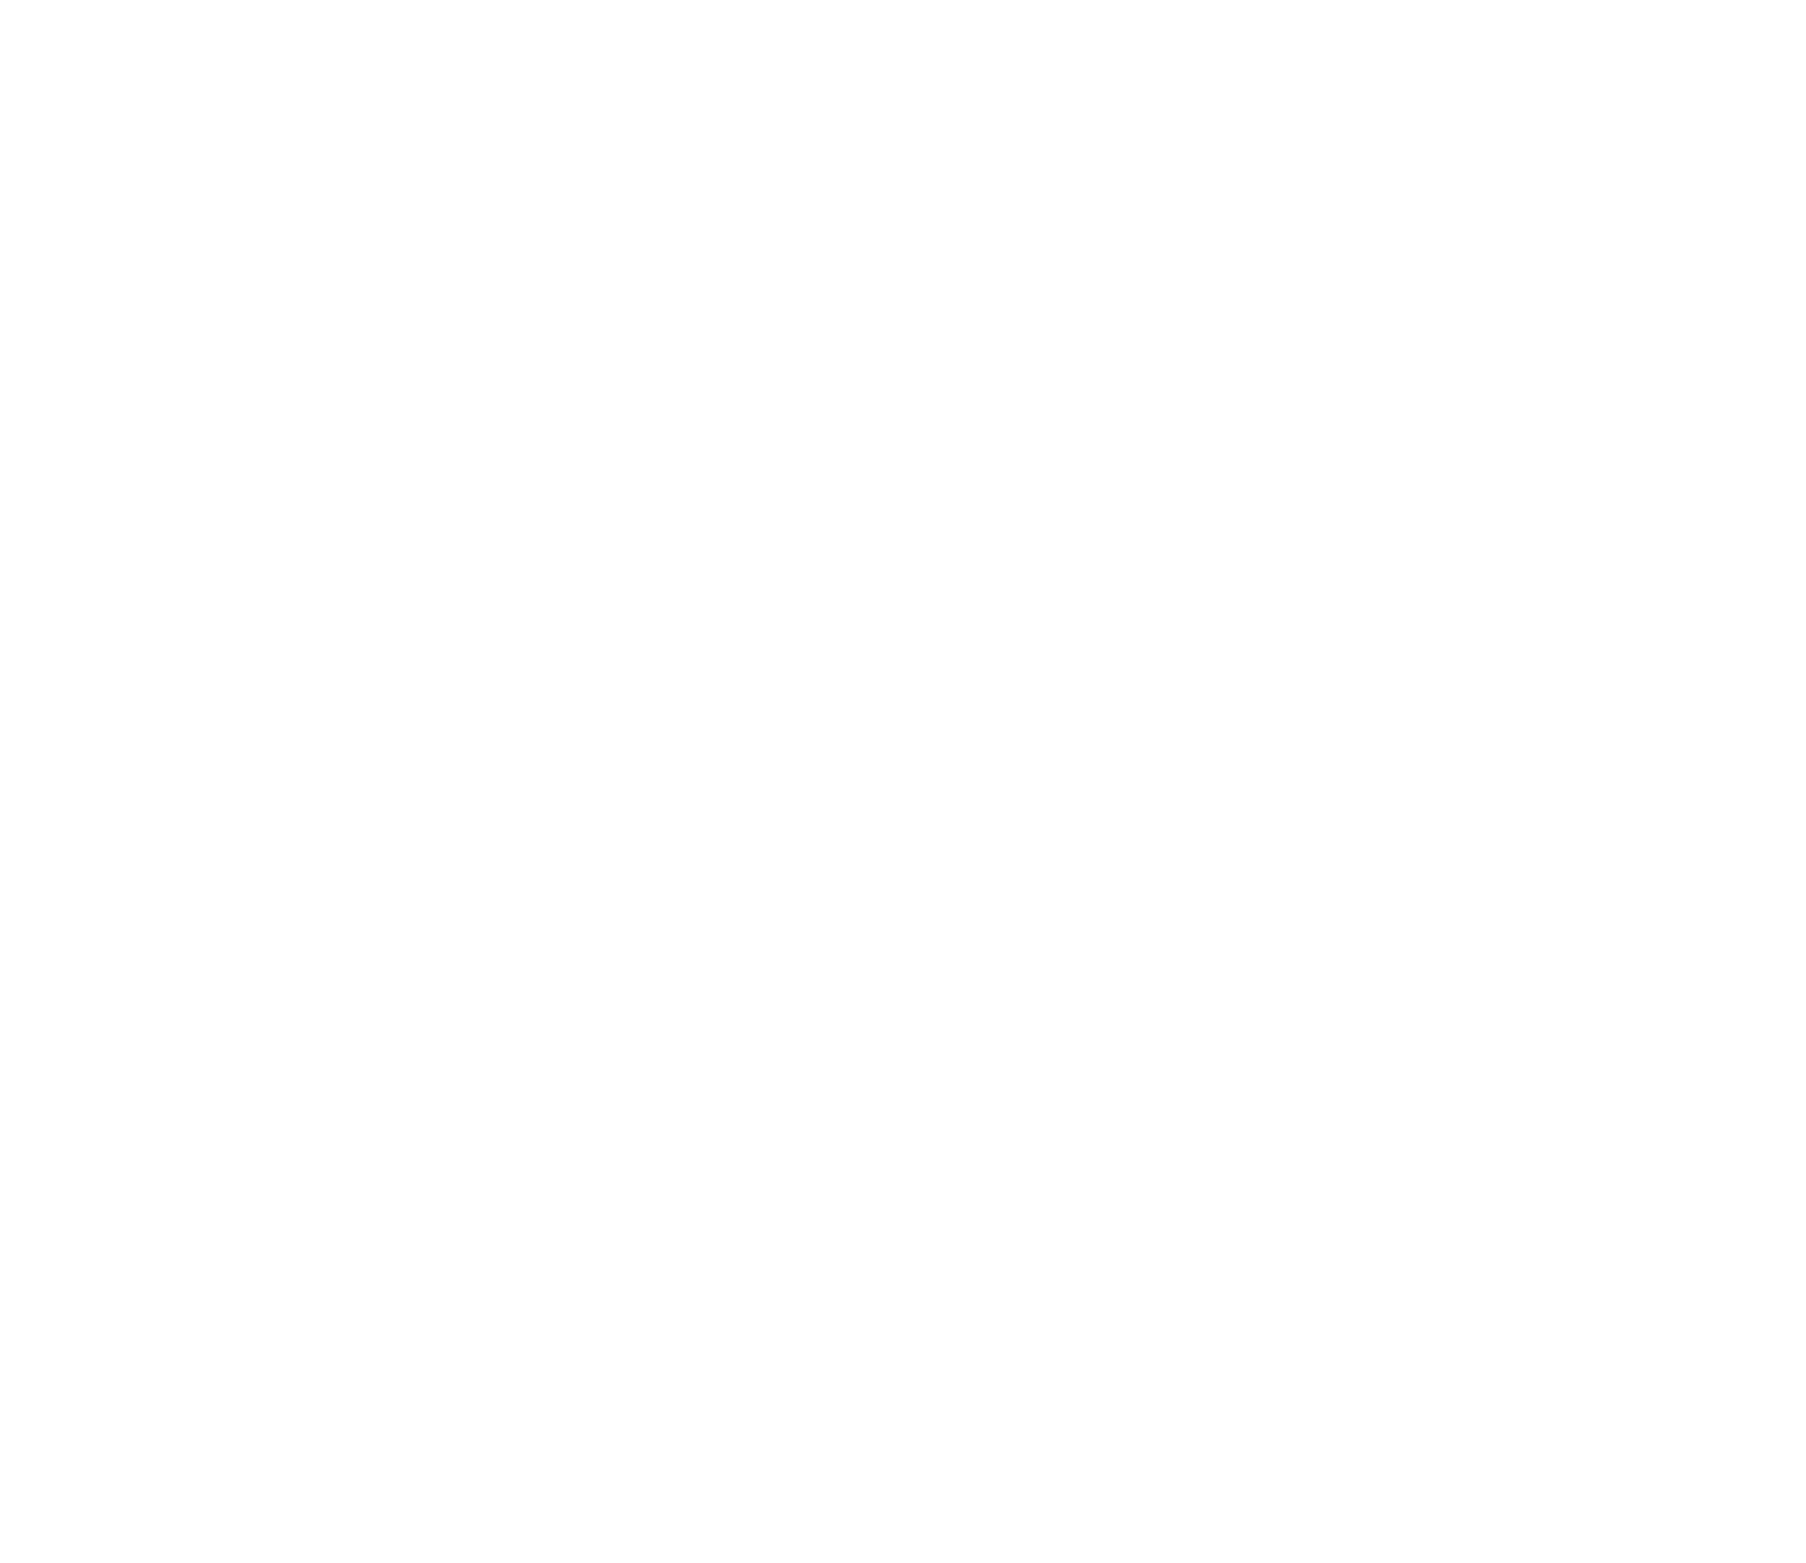 PitStop Bergen logo hvit